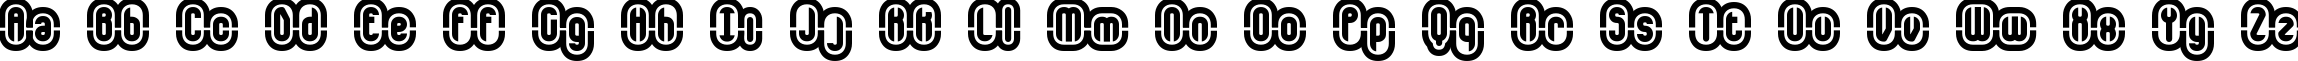 Пример написания английского алфавита шрифтом Encapsulate BRK